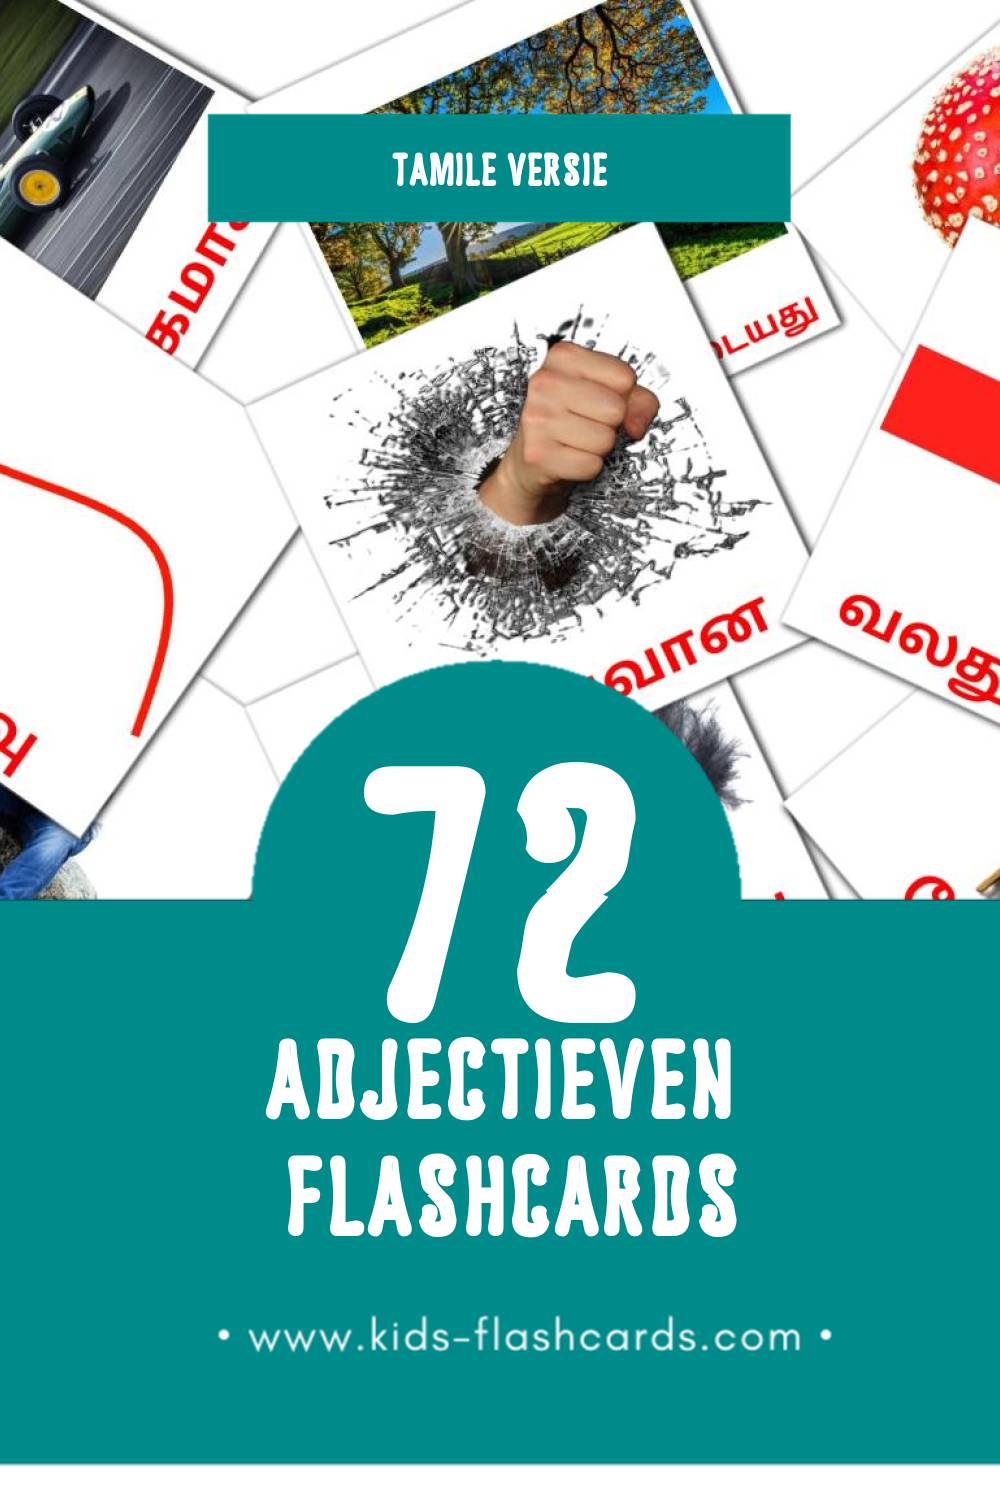 Visuele பெயரடை Flashcards voor Kleuters (72 kaarten in het Tamil)